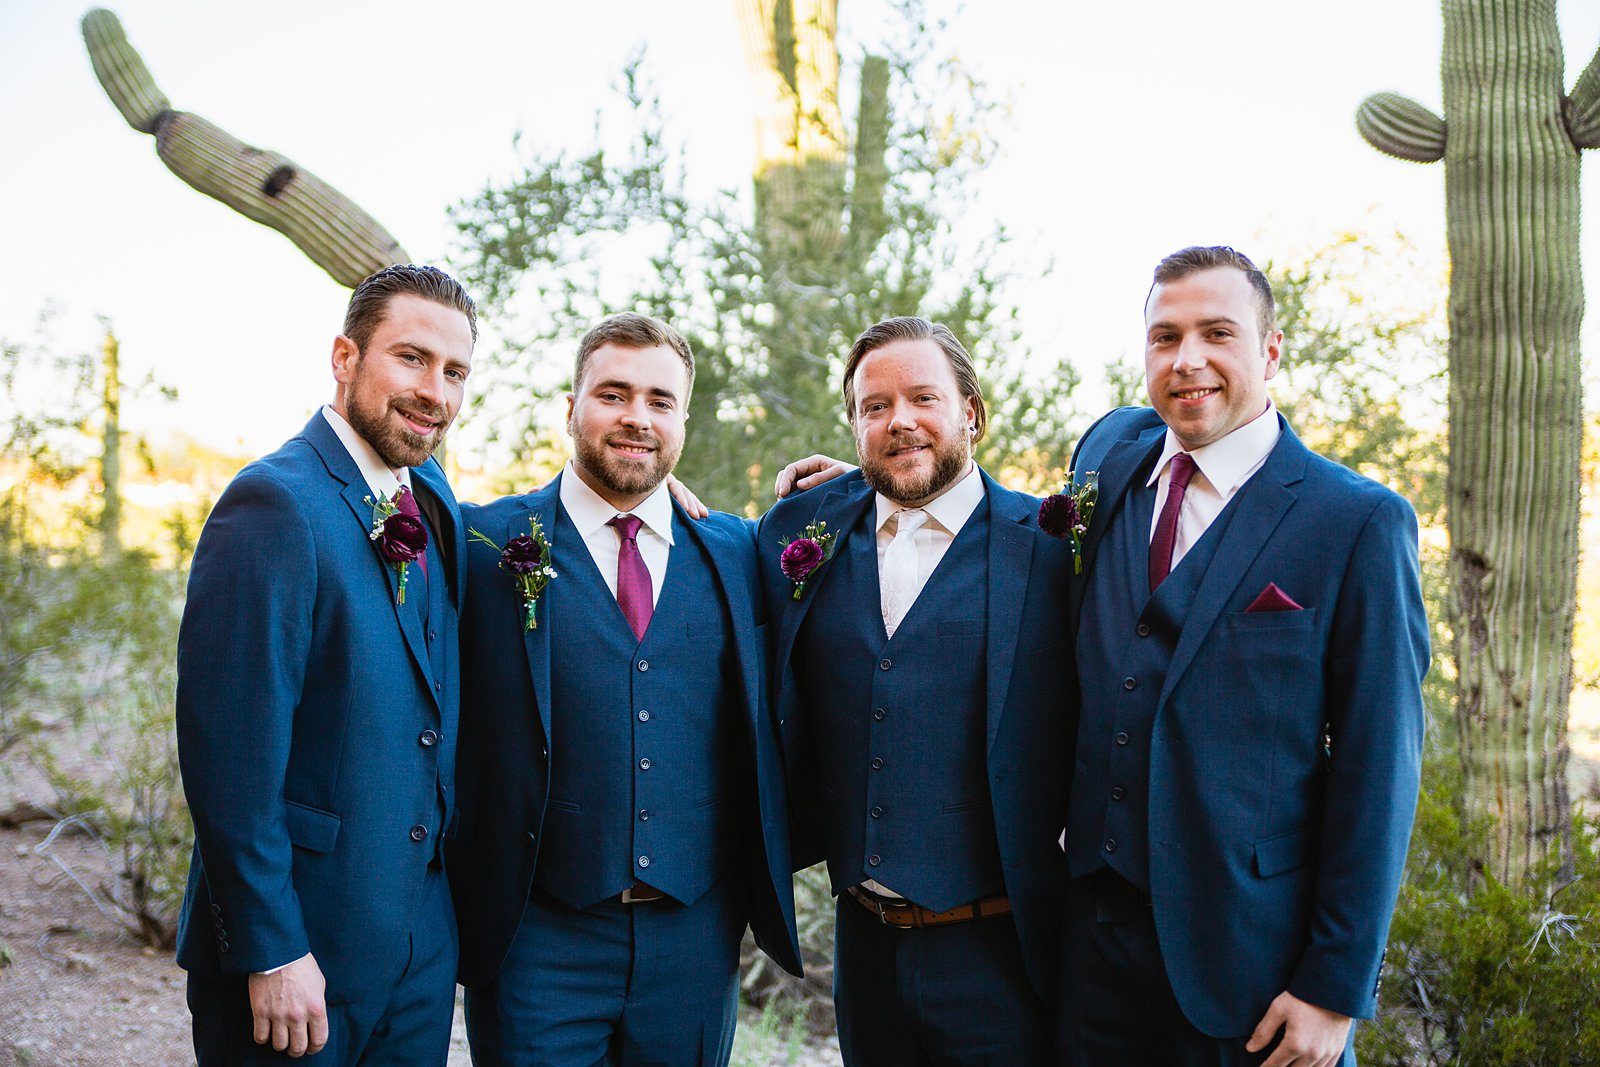 Groom and groomsmen together at a Arizona Heritage Center at Papago Park wedding by Arizona wedding photographer PMA Photography.